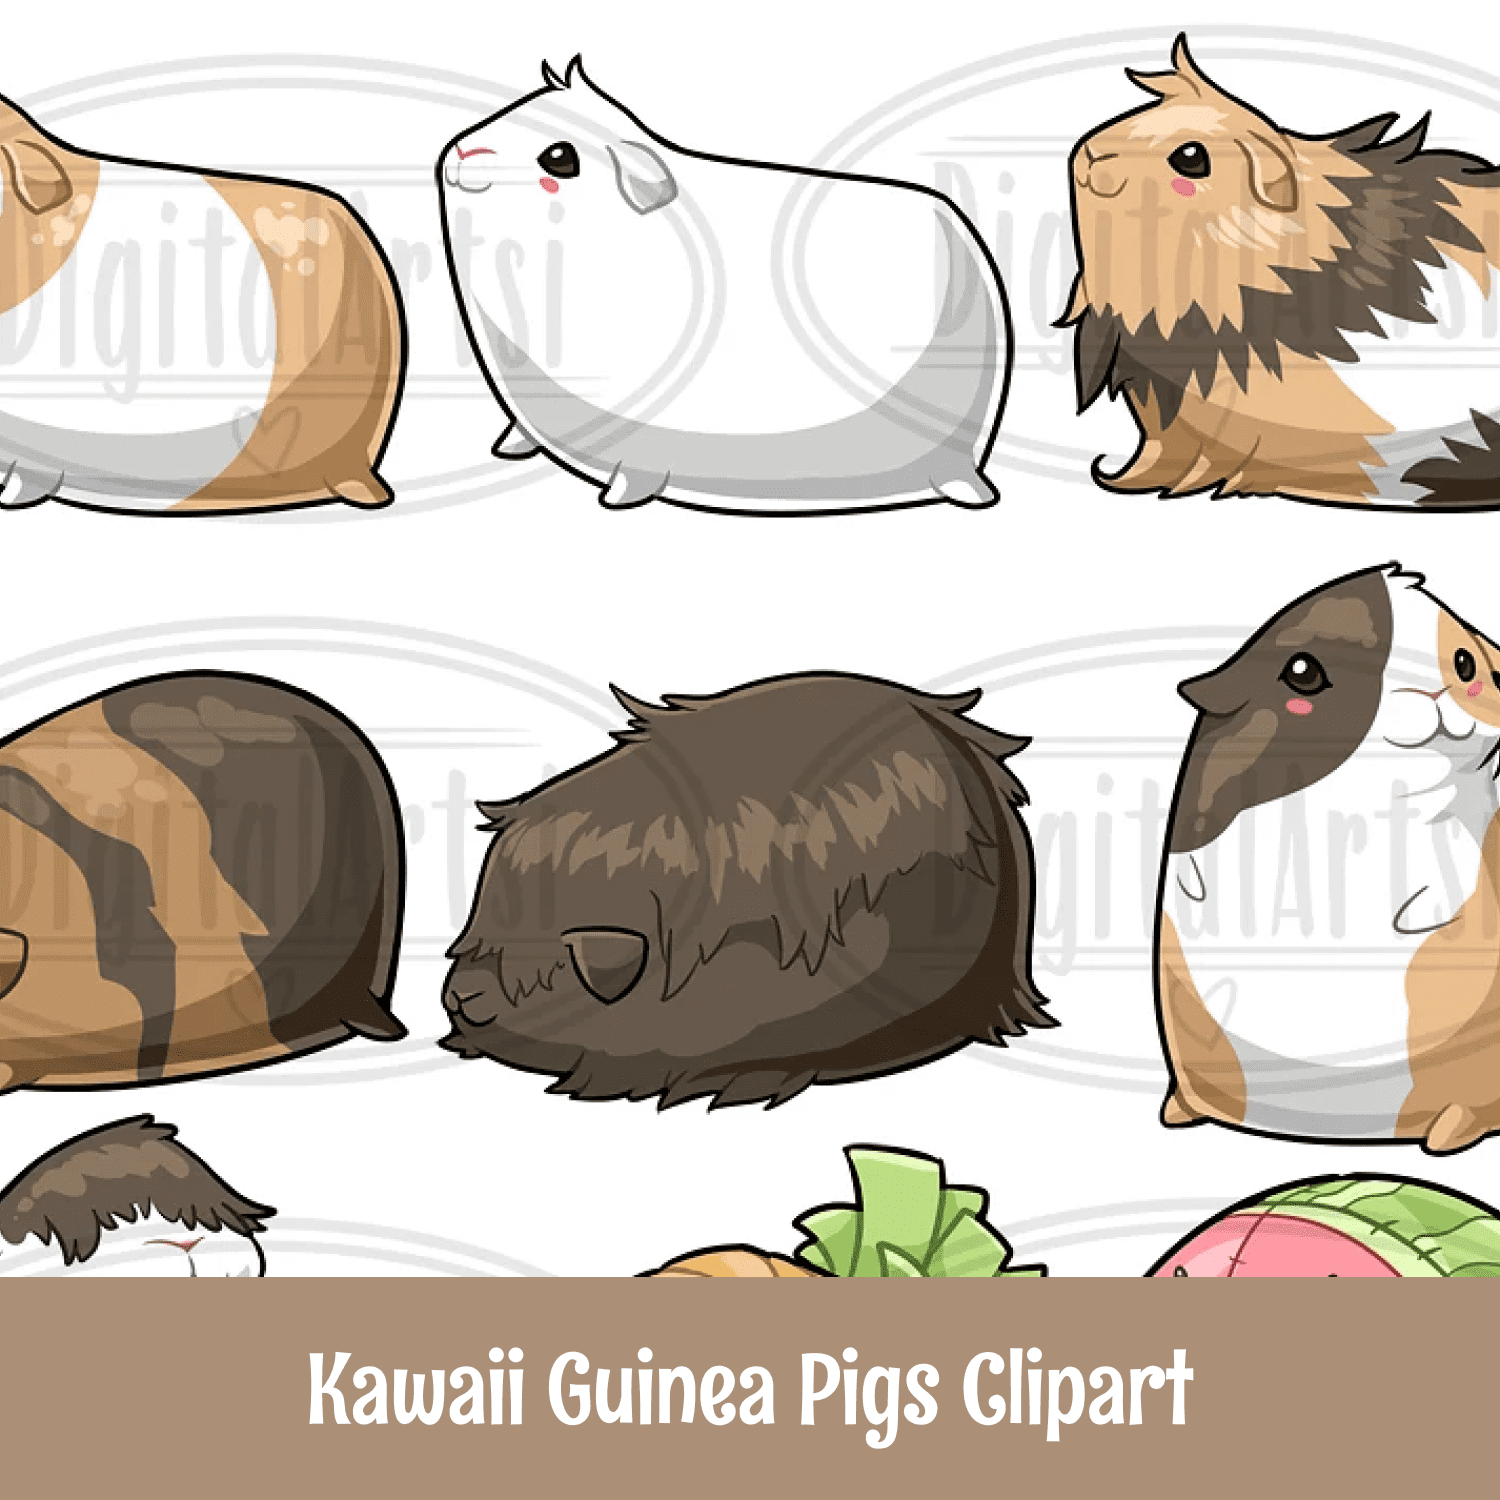 Kawaii Guinea Pigs Clipart cover.